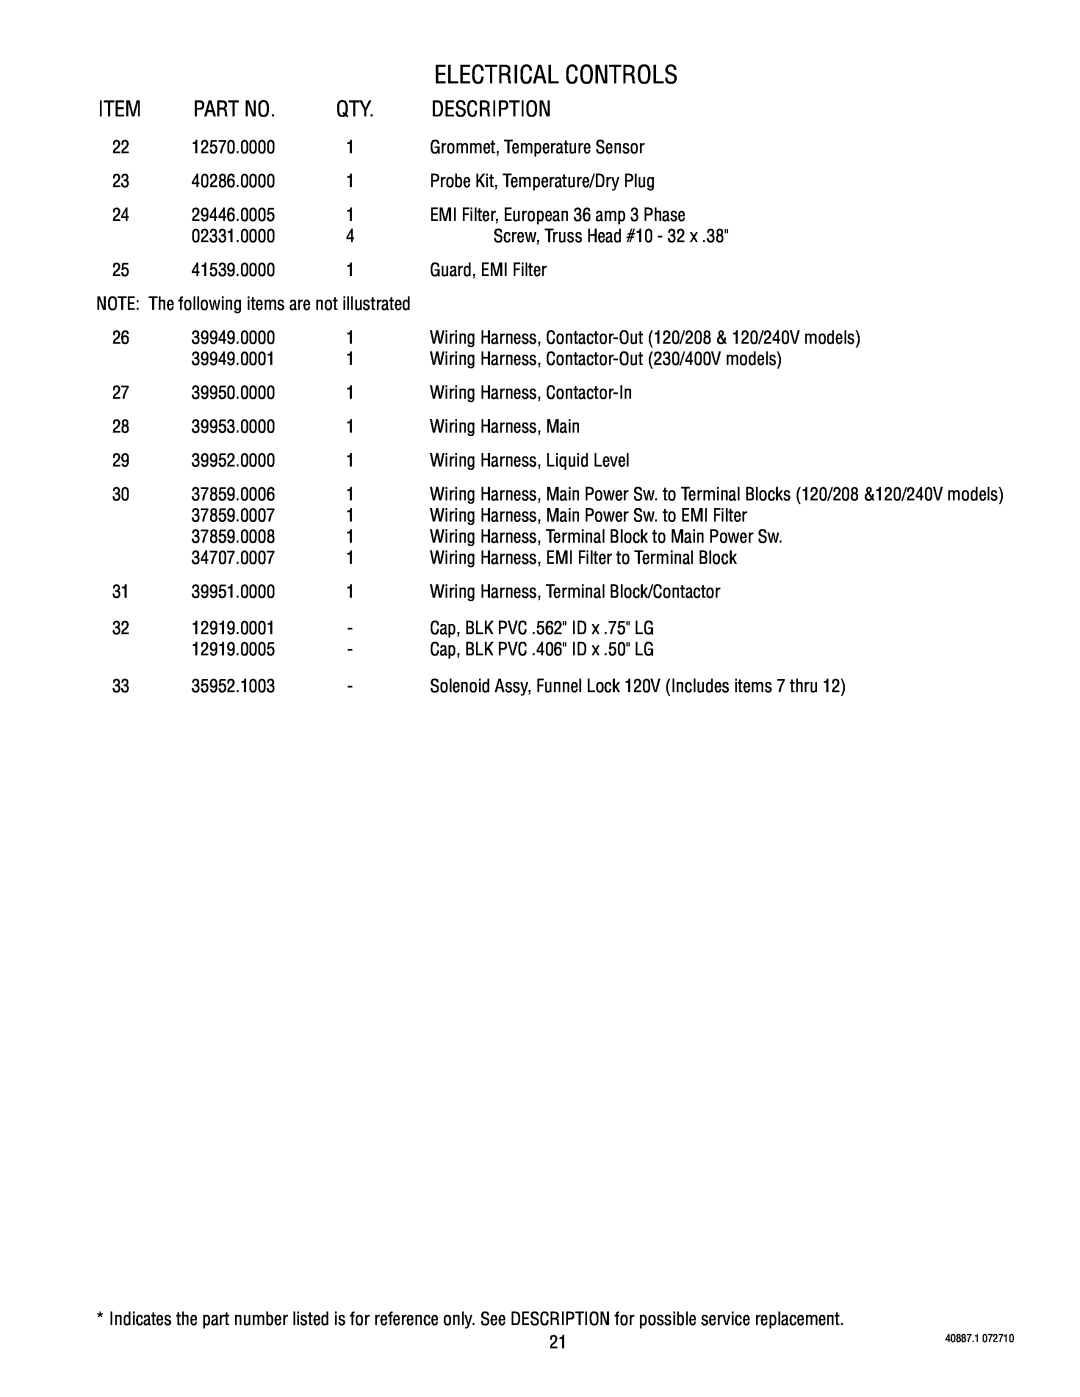 Bunn specifications electrical controls, Description, 12570.0000 